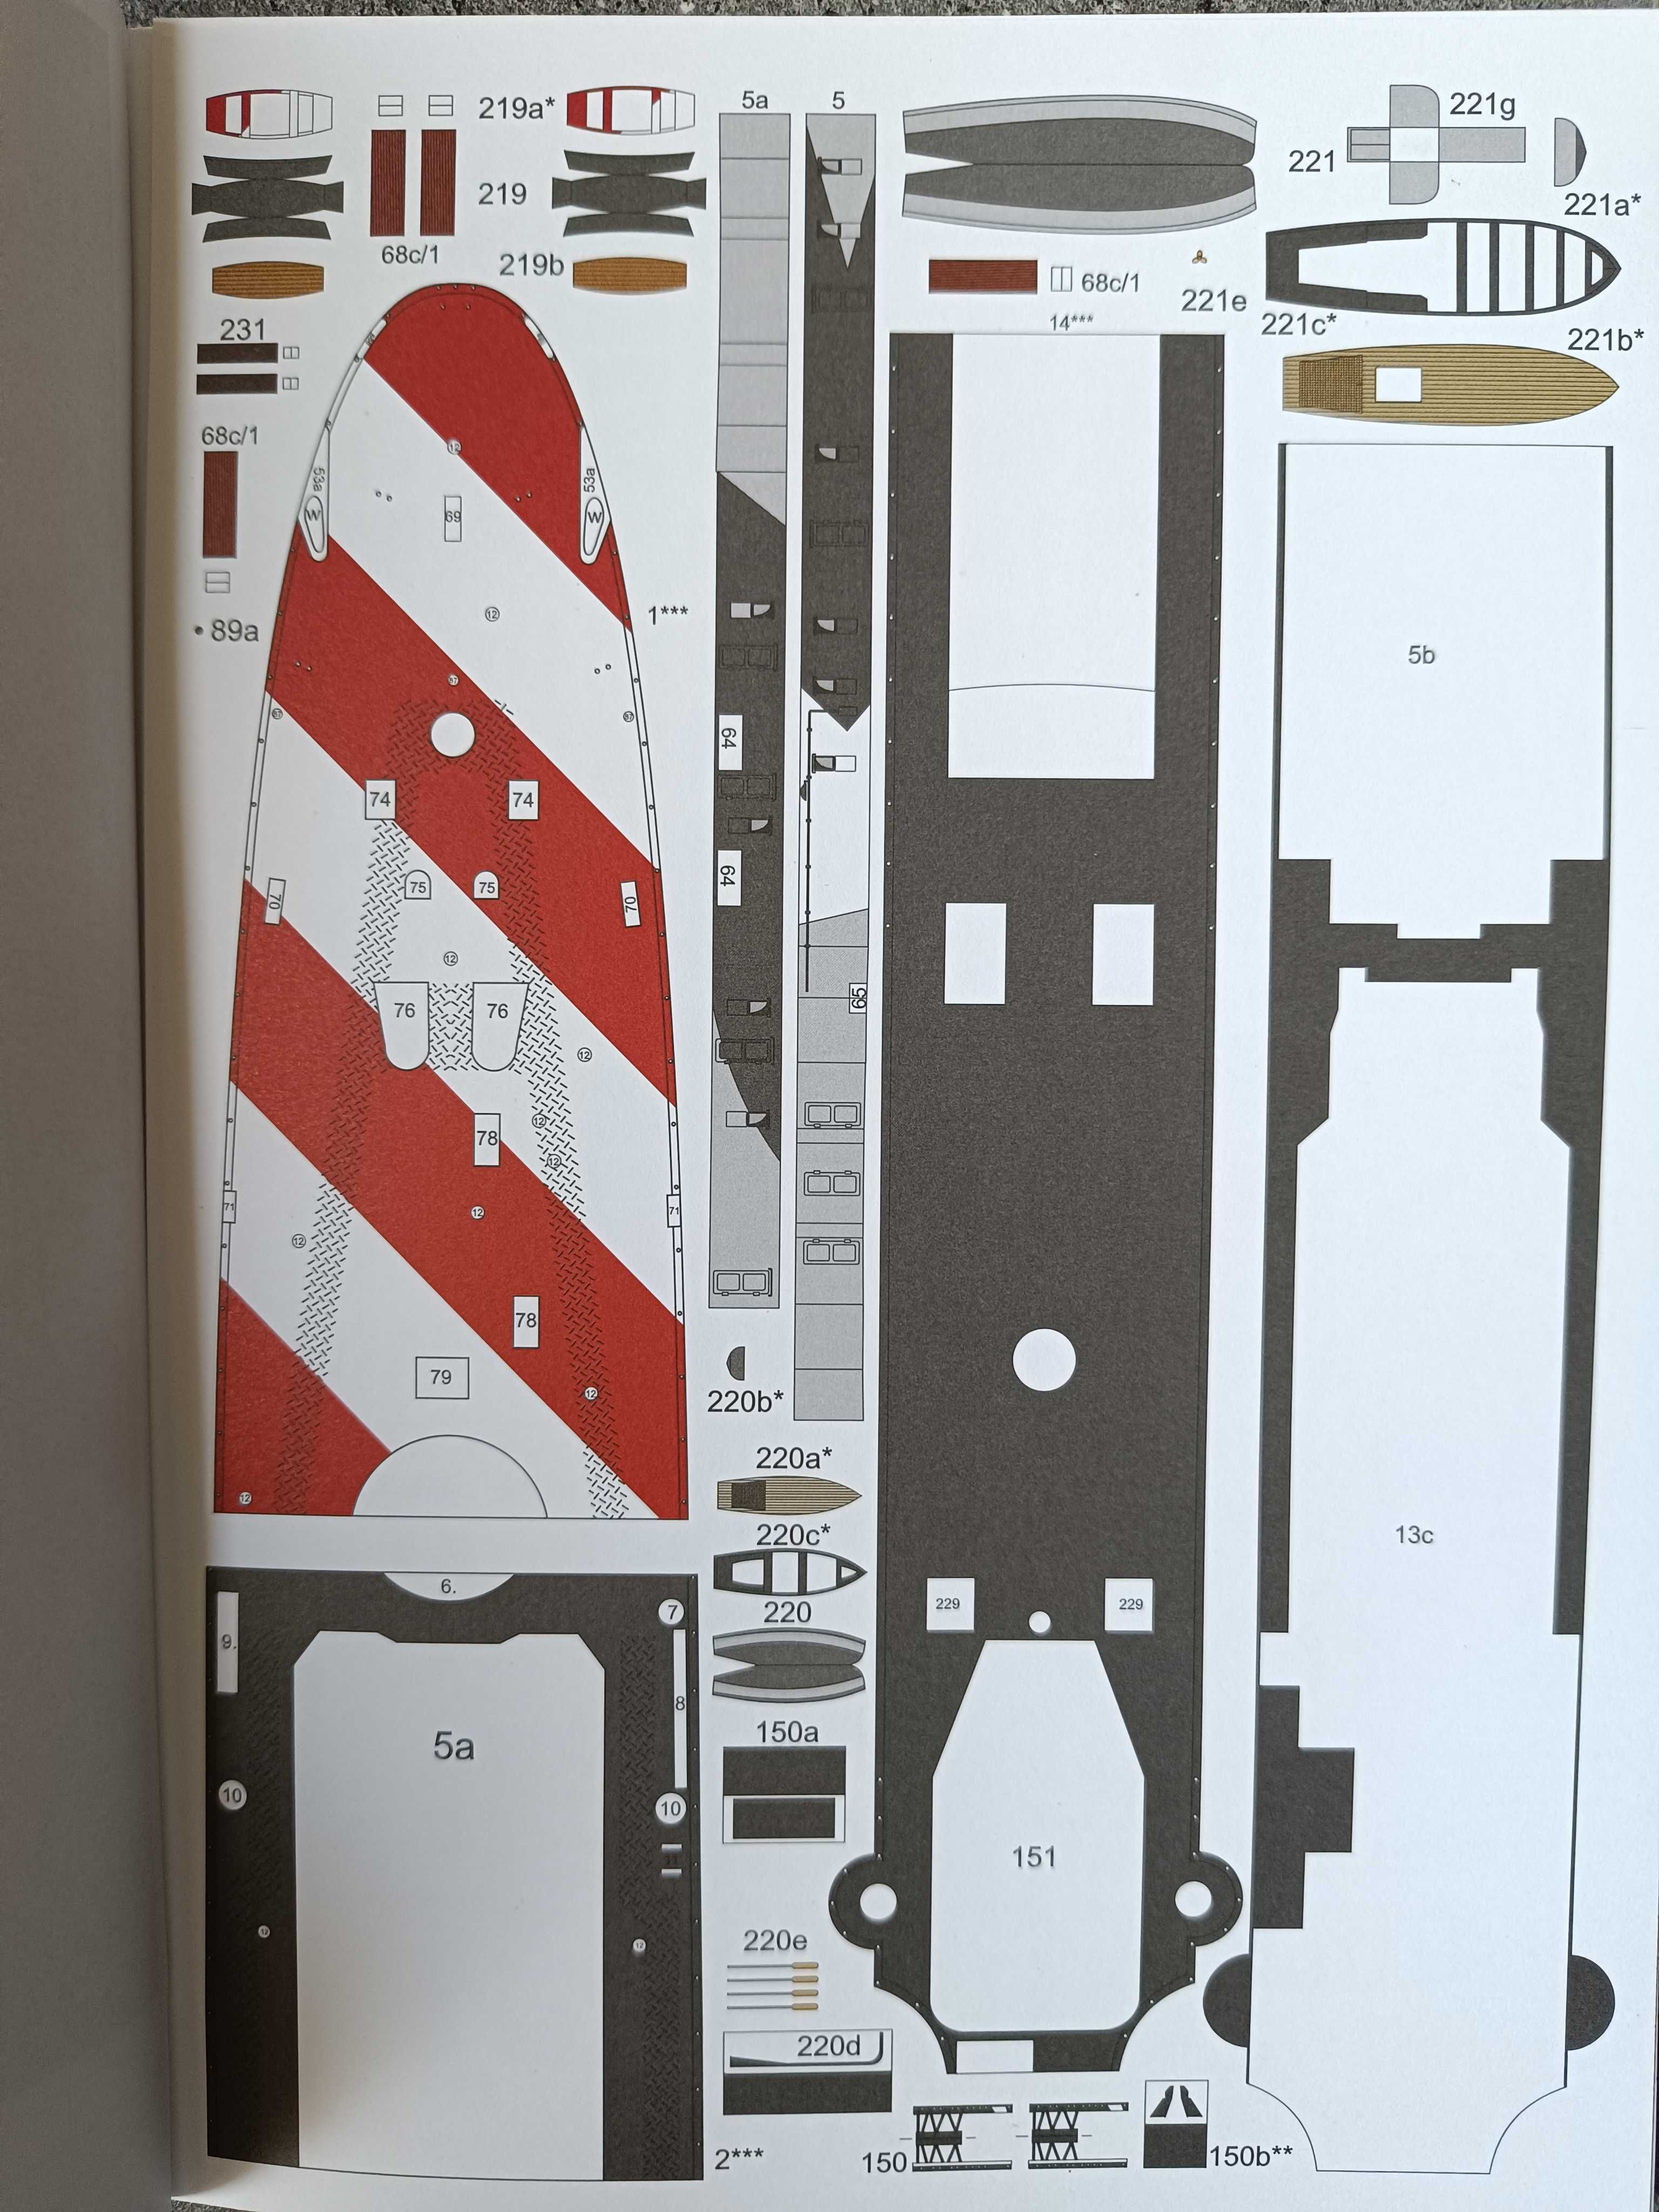 Model kartonowy Angraf 157: lekki krążownik RAIMONDO MONTECUCCOLI